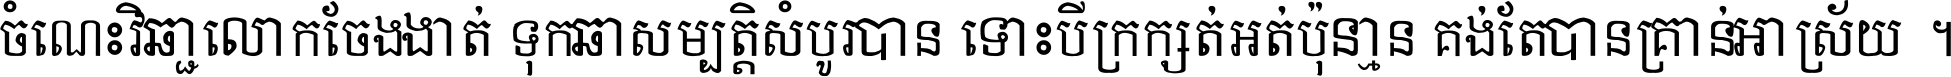 LimonS1 Unicode